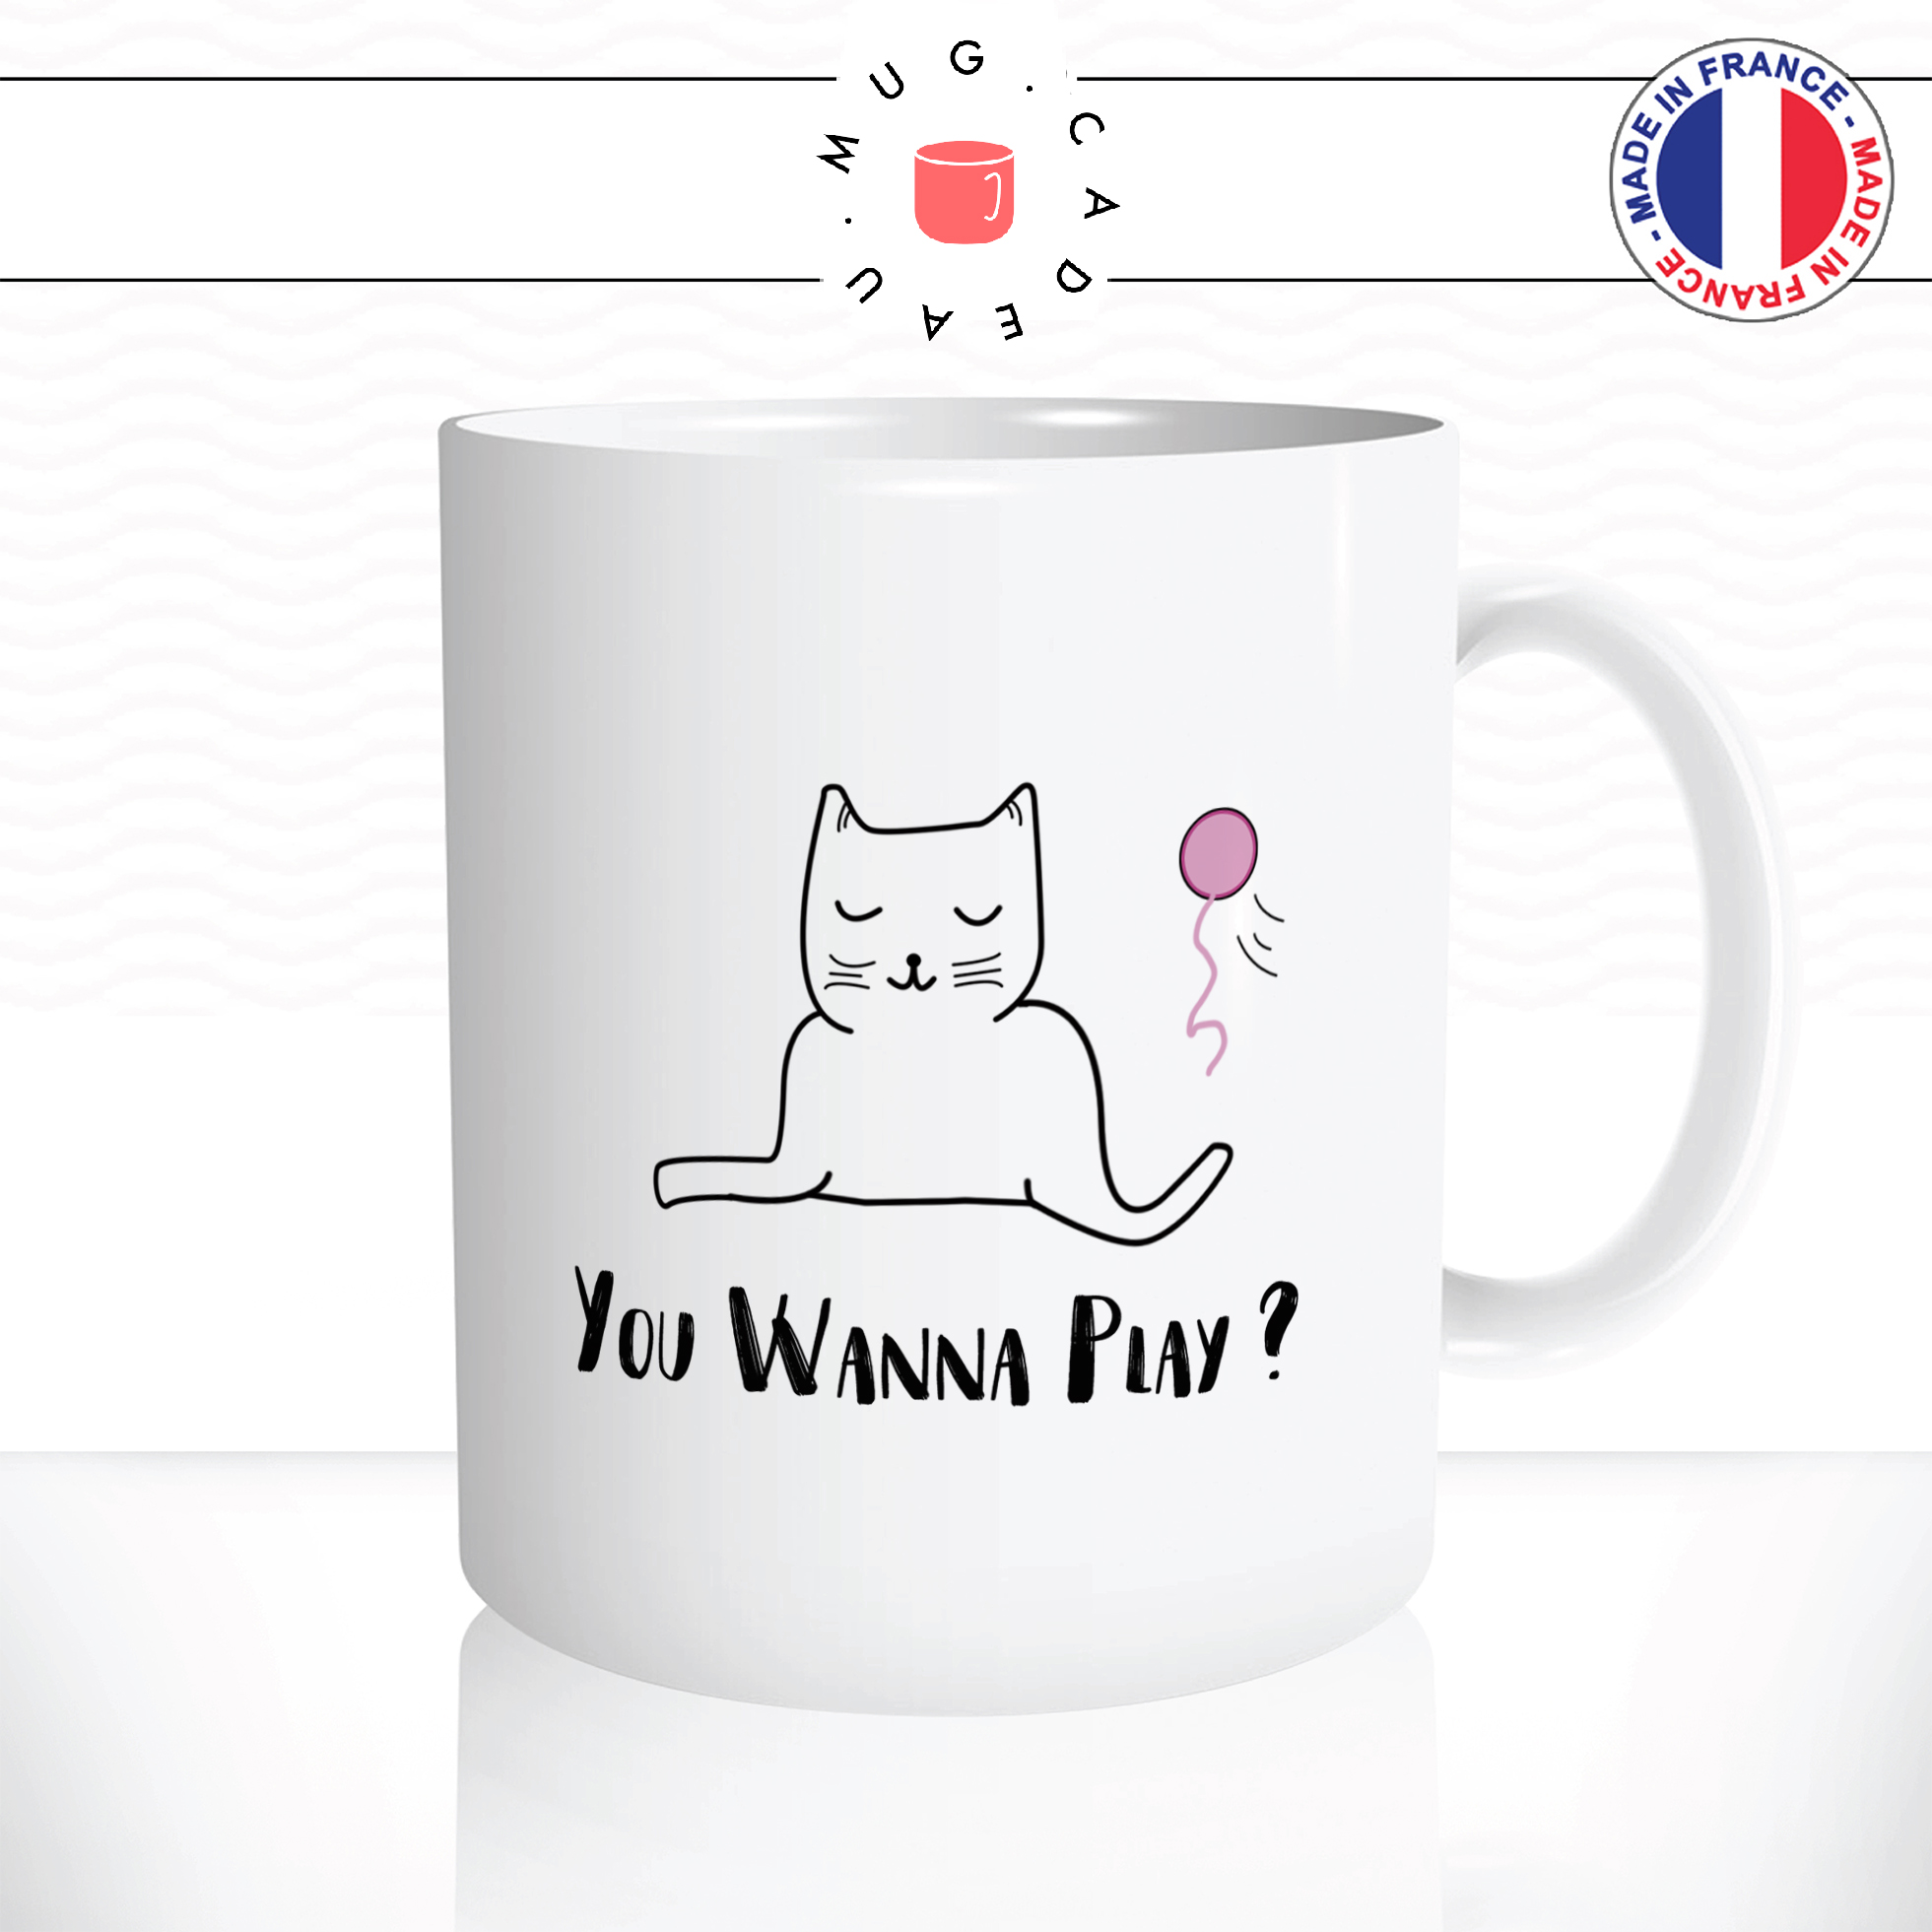 mug-tasse-ref19-chat-pelote-you-wanna-play-cafe-the-mugs-tasses-personnalise-anse-droite